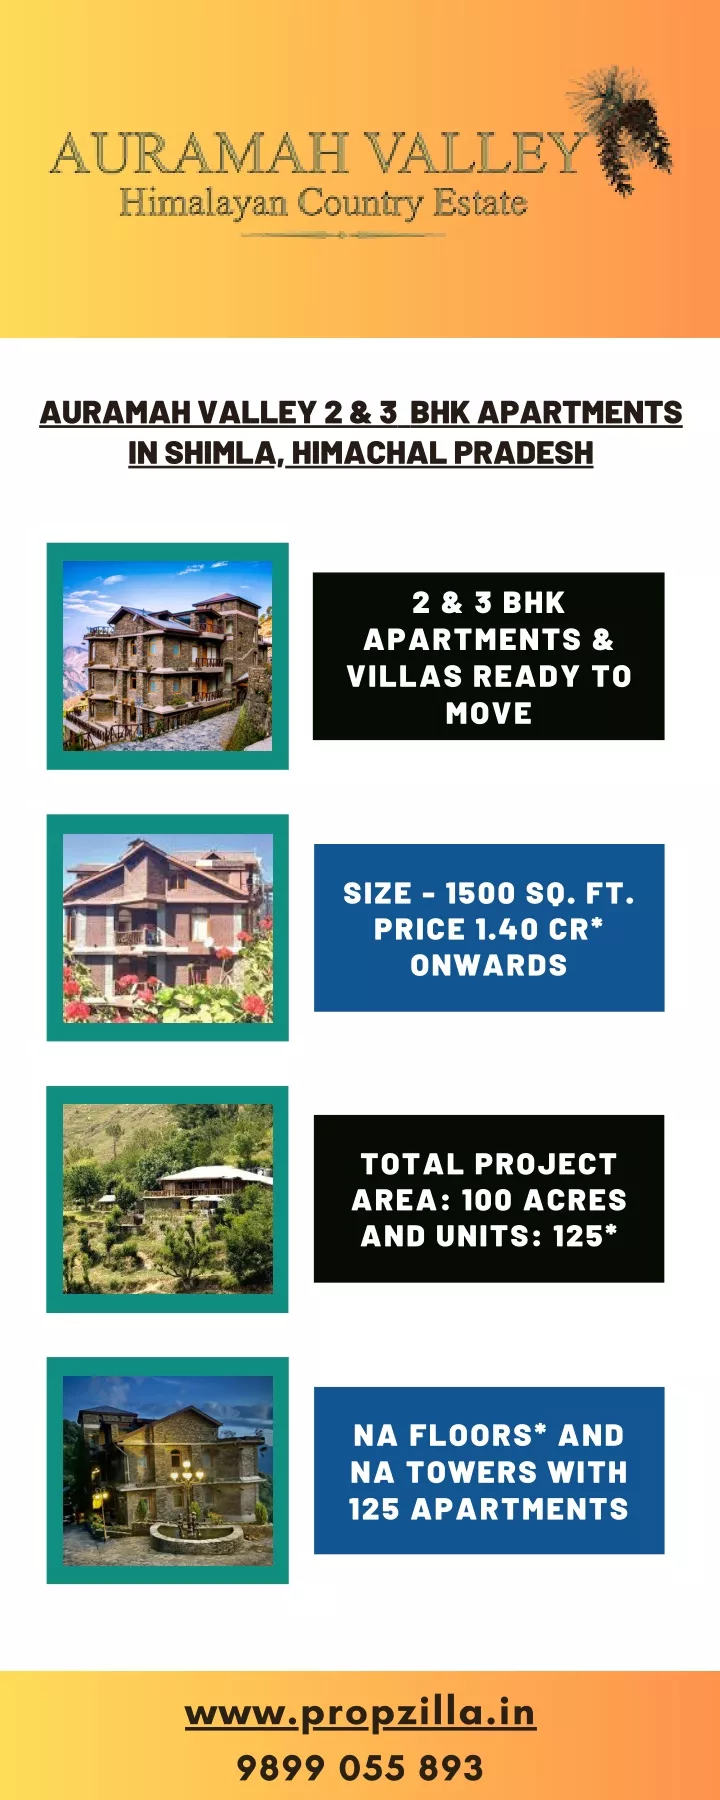 auramah valley 2 3 bhk apartments in shimla